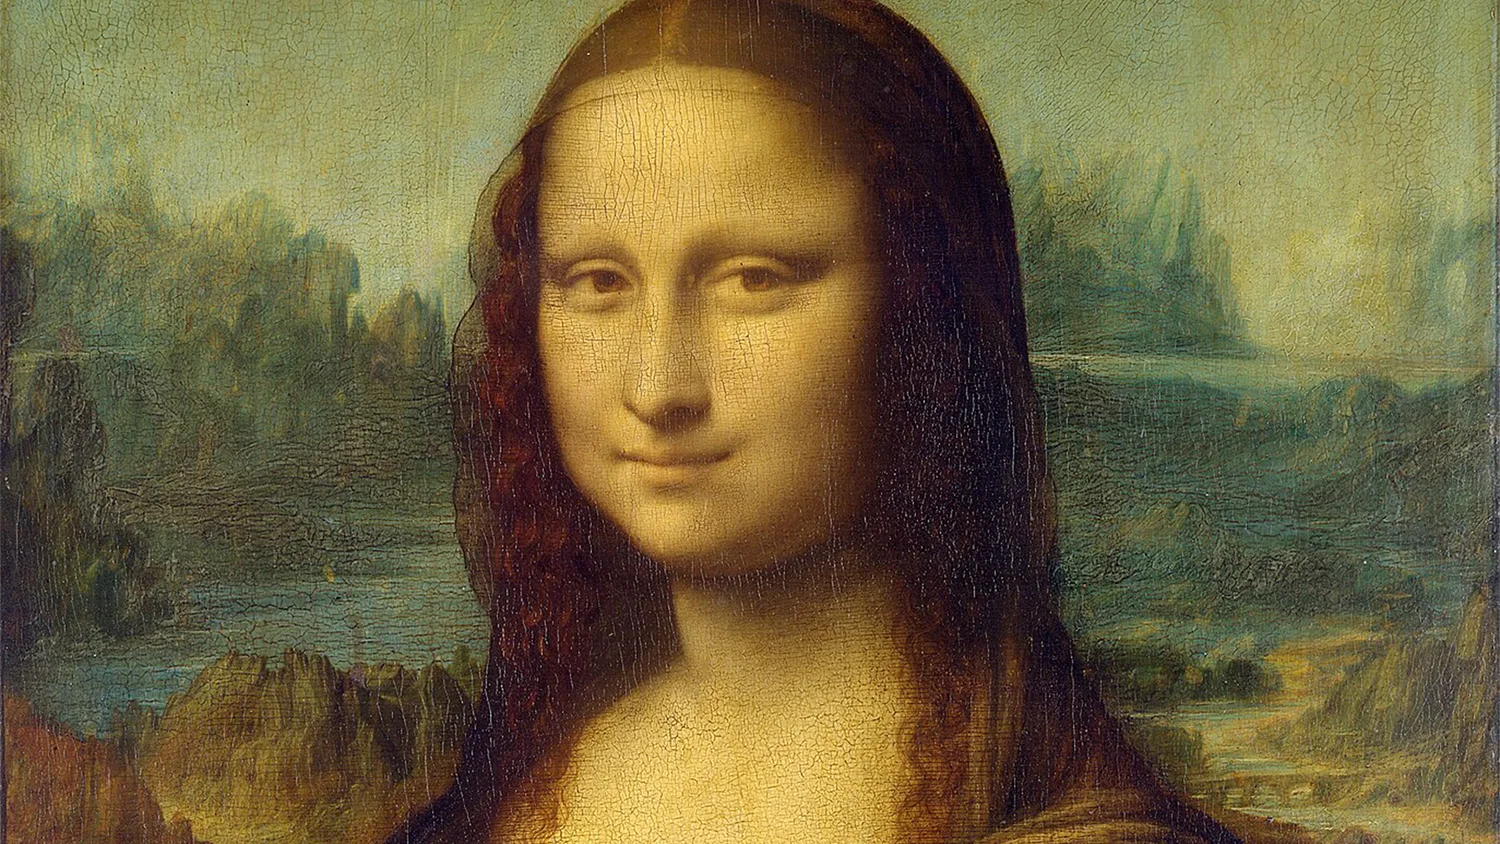 Mona Lisa by Leonardo da Vinci from C2RMF retouched